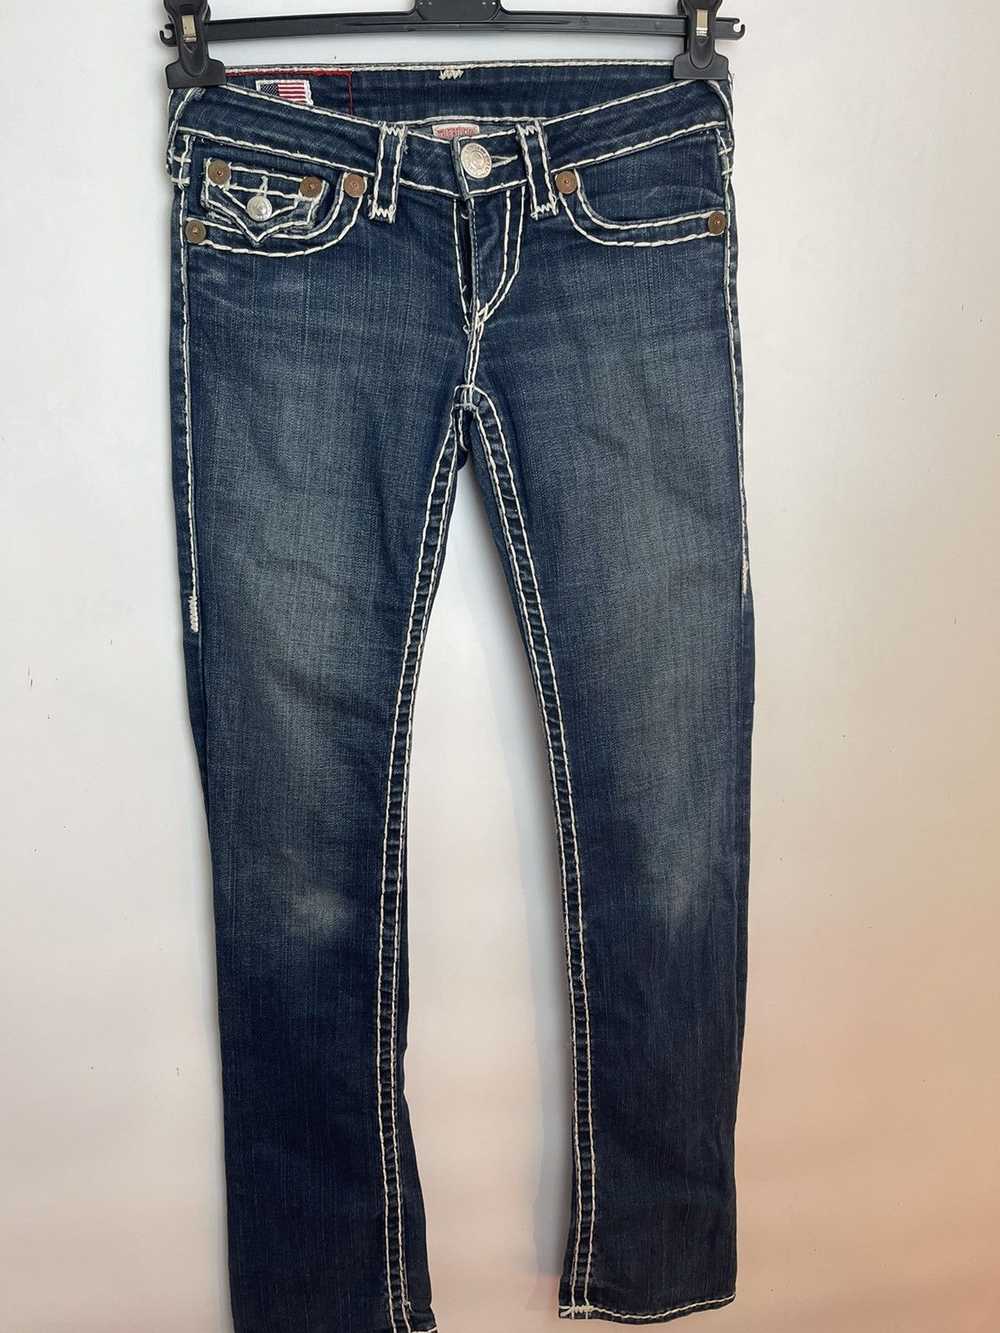 True Religion True Religion jeans made in USA - image 5